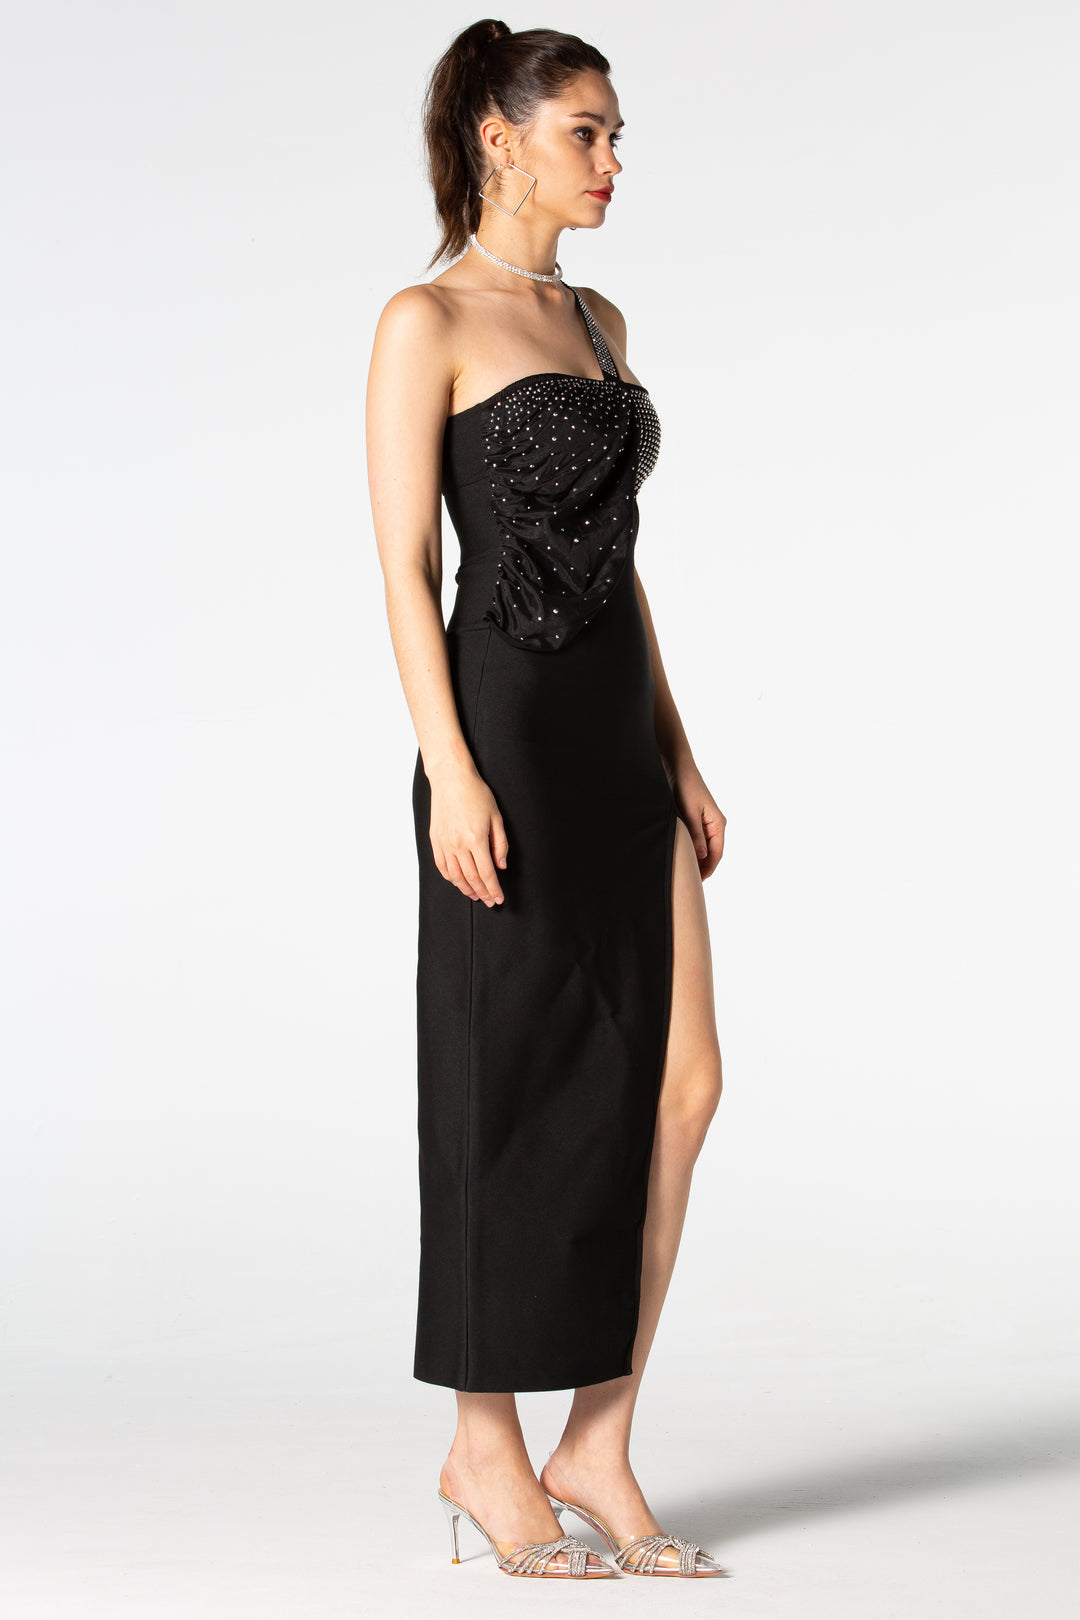 Sesidy-Giavanna Rhinestone One-shoulder Dress-Women's Clothing Online Store